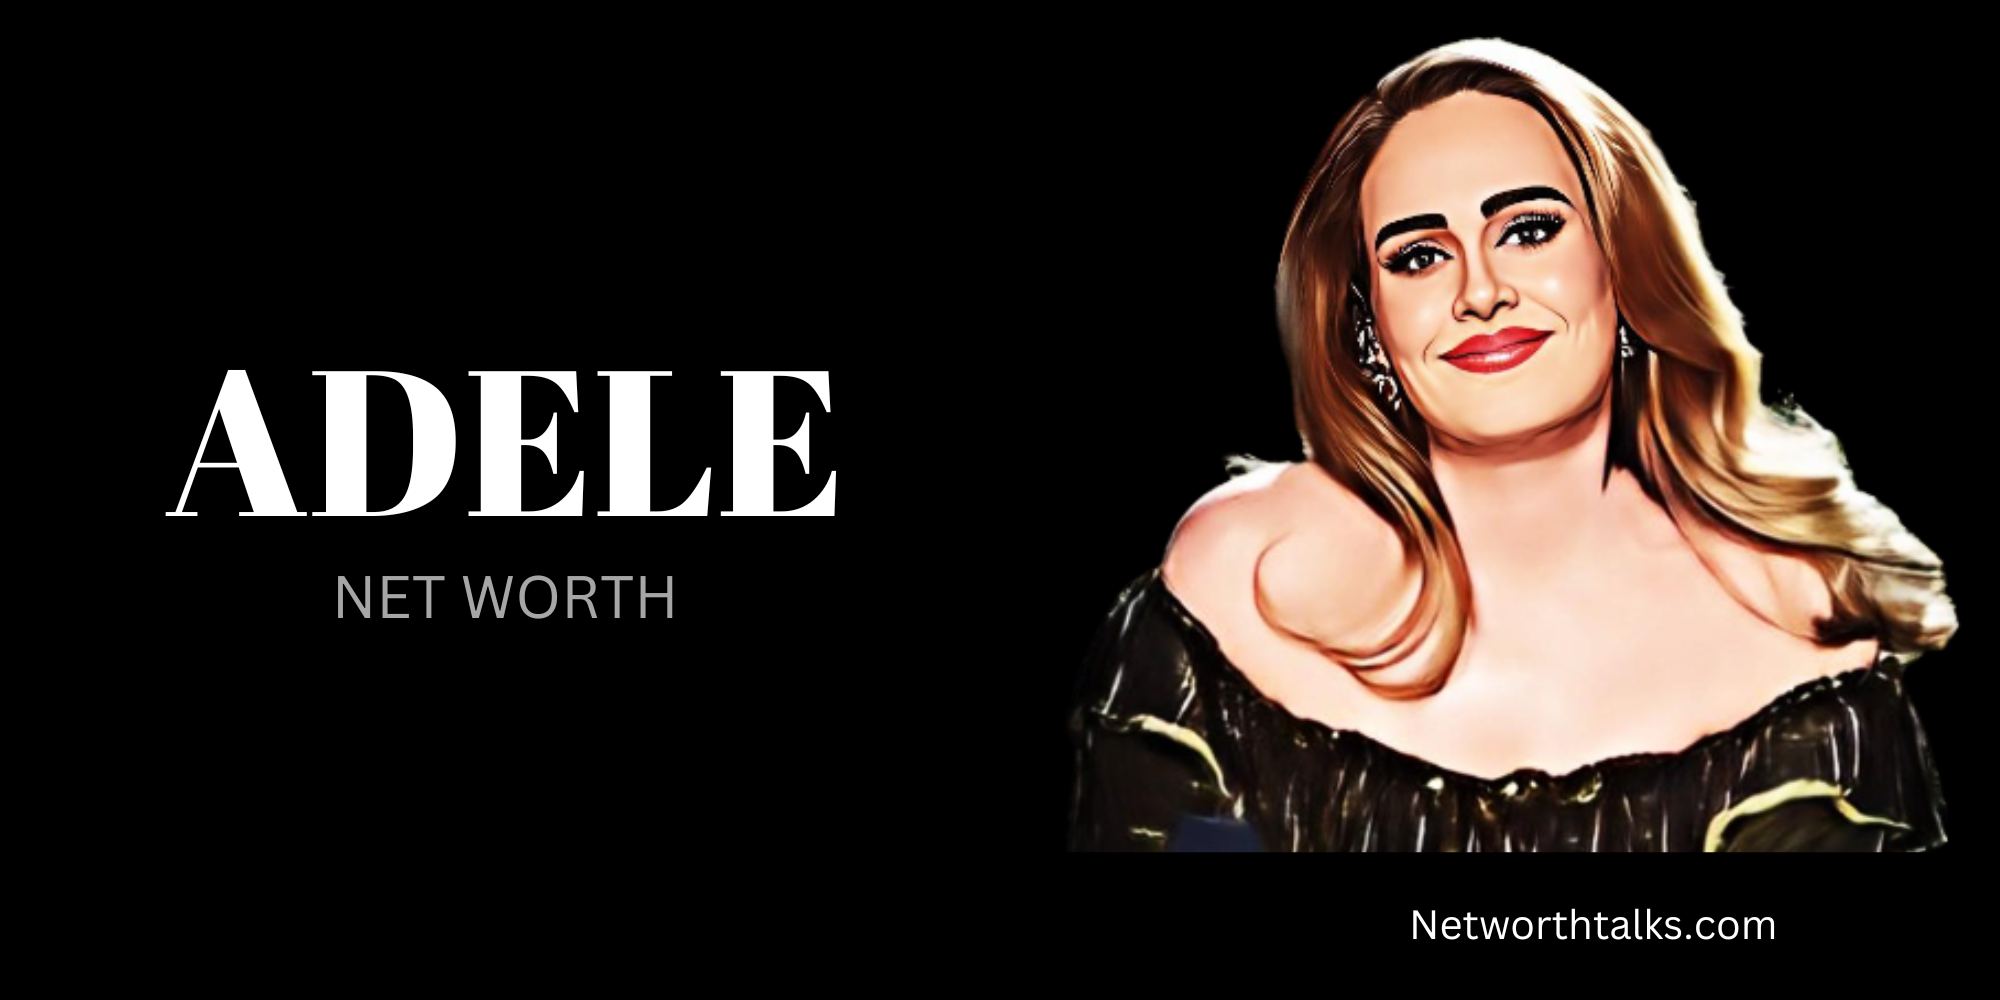 Adele's Net Worth in 2022